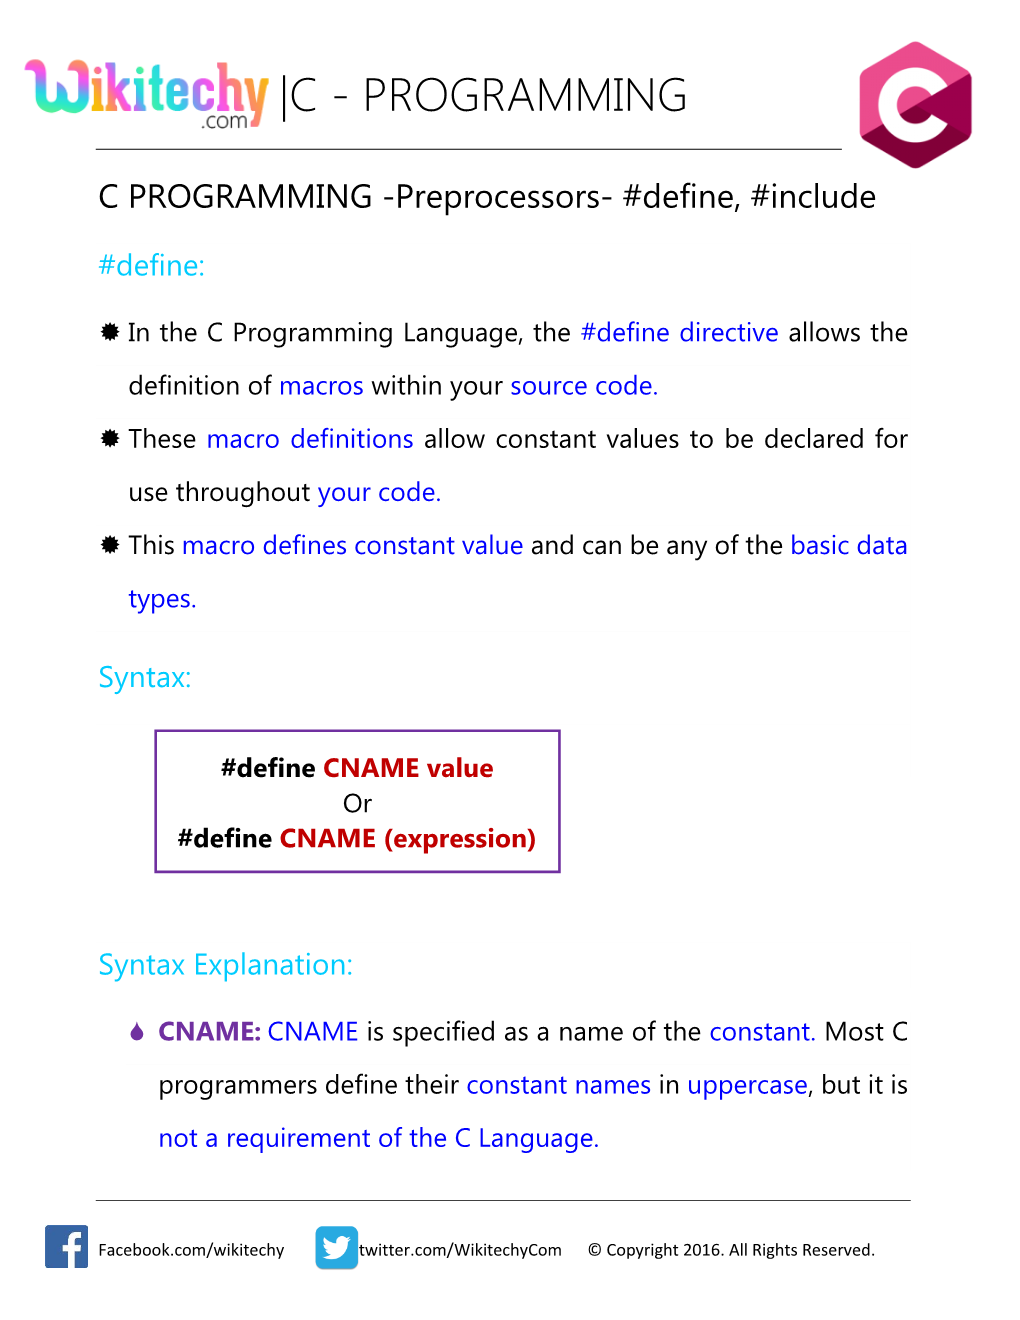 |C - Programming